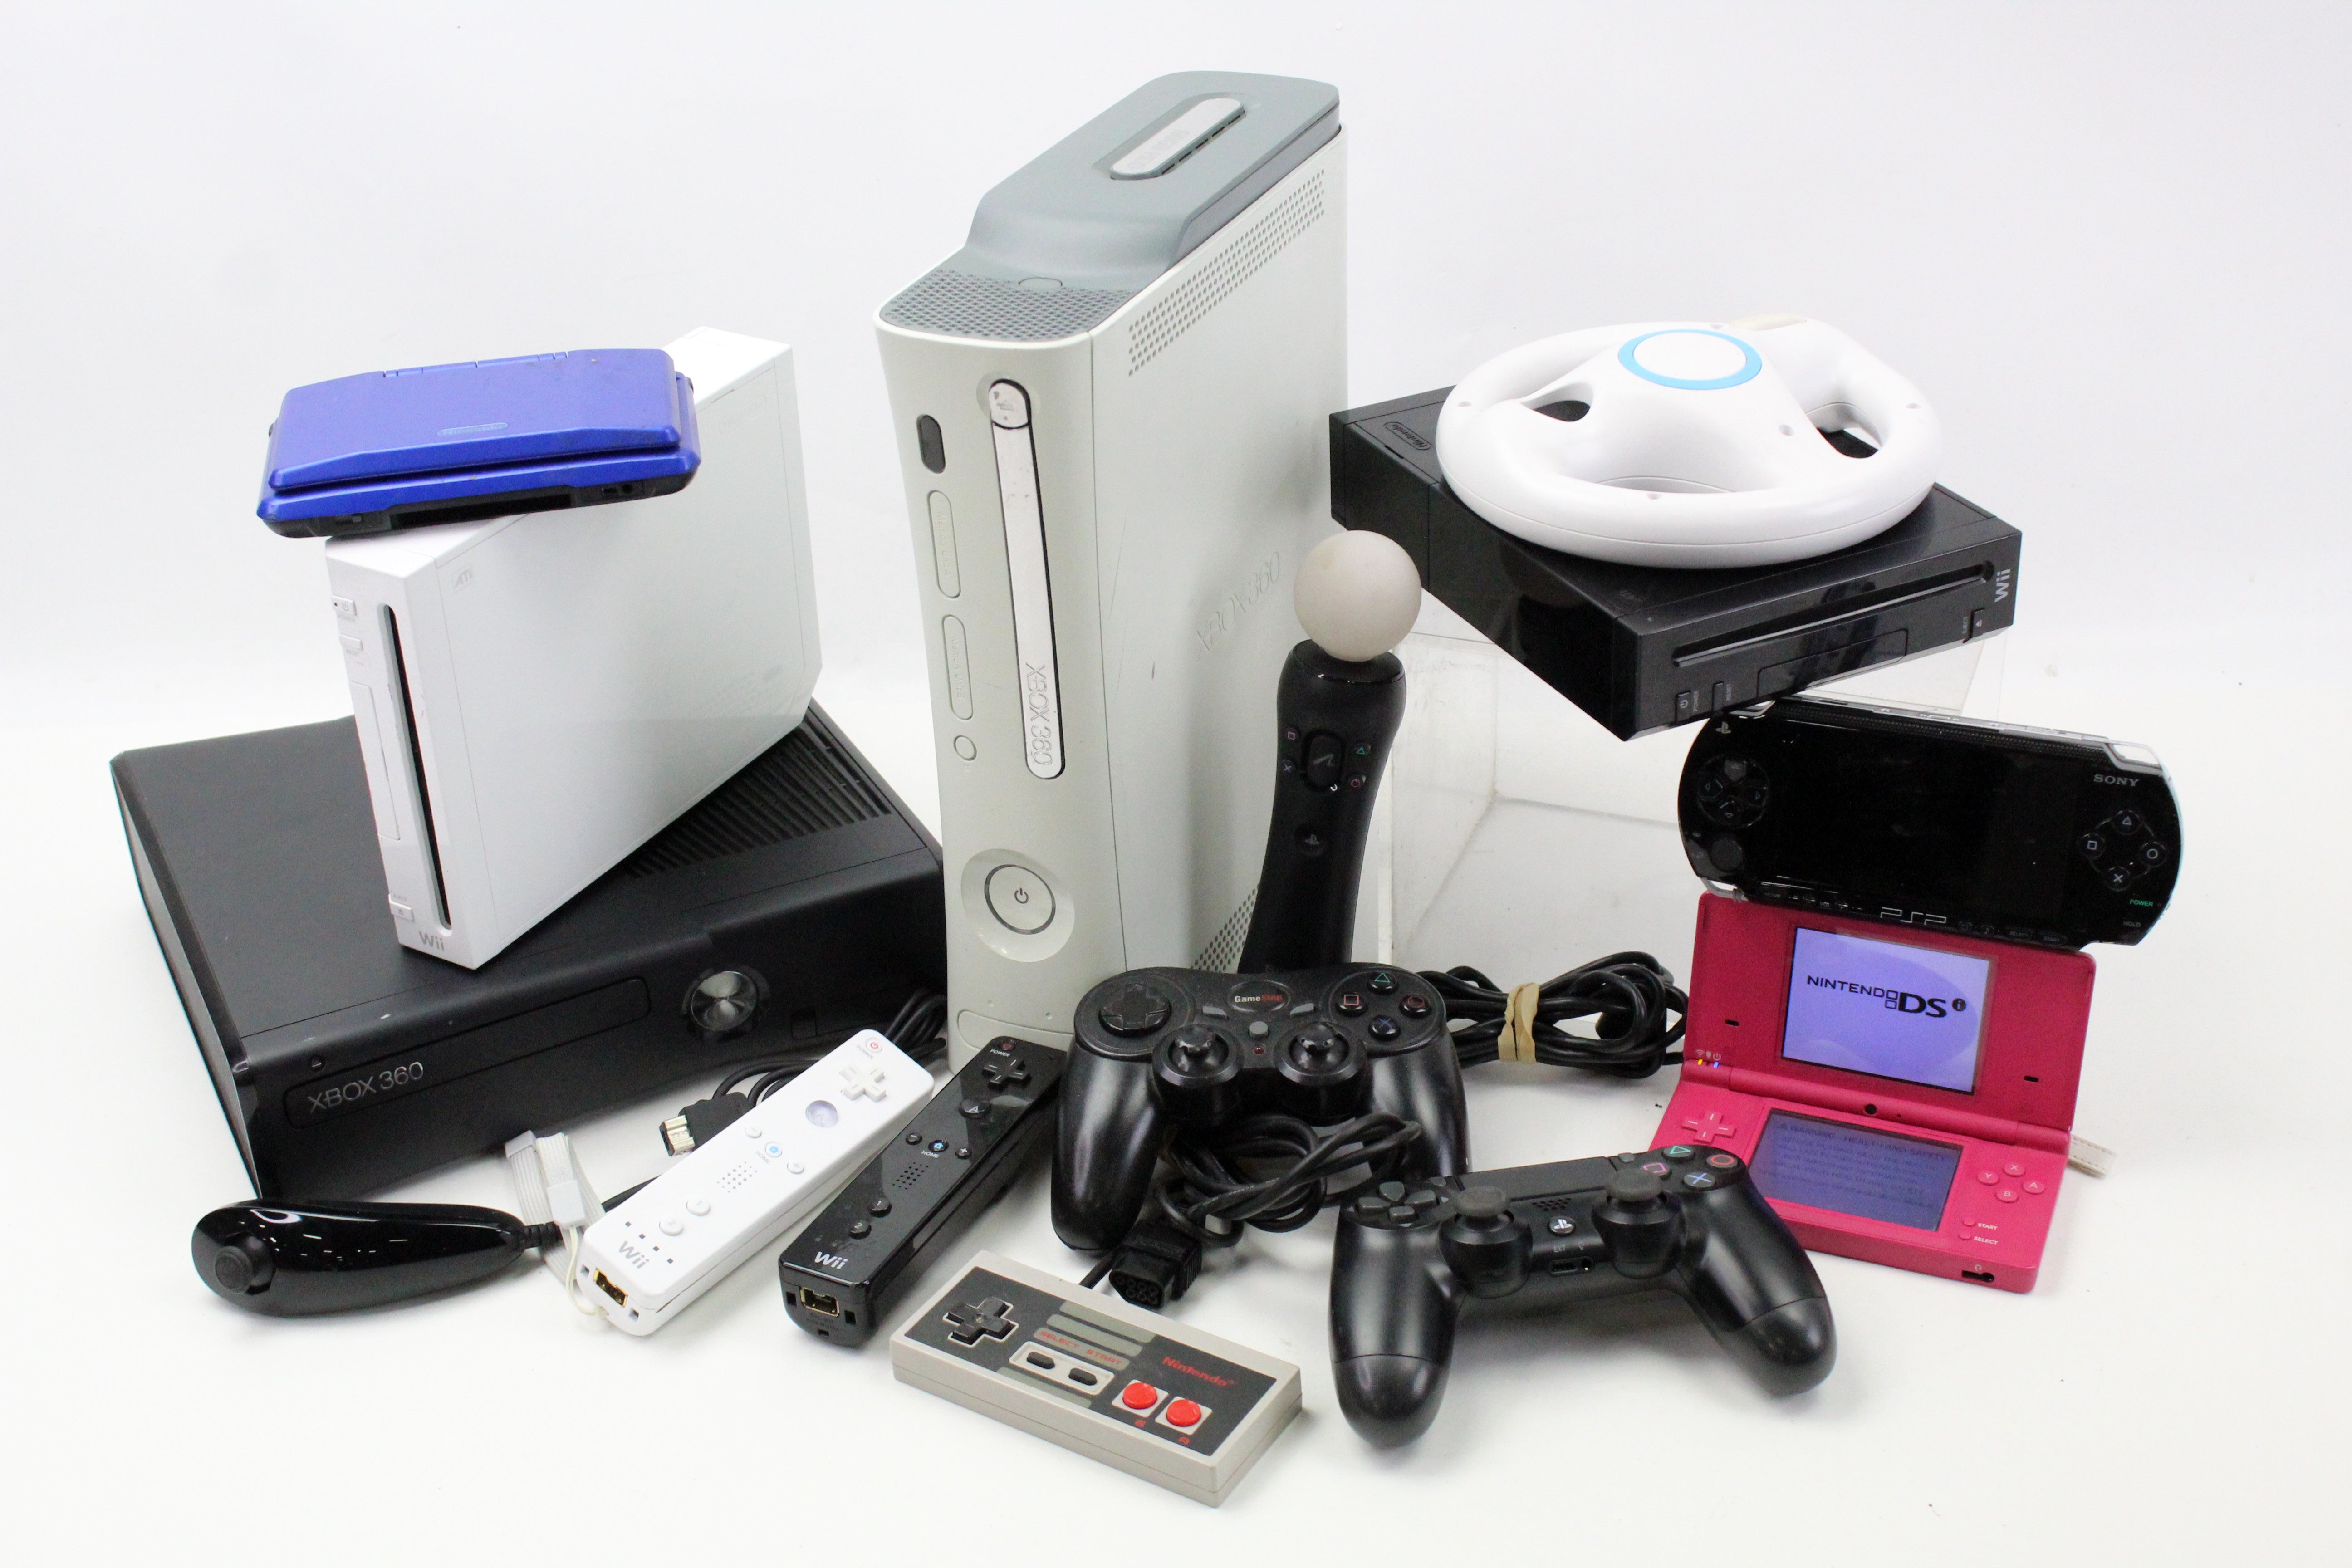 Video Game Box – Buy Bluebox